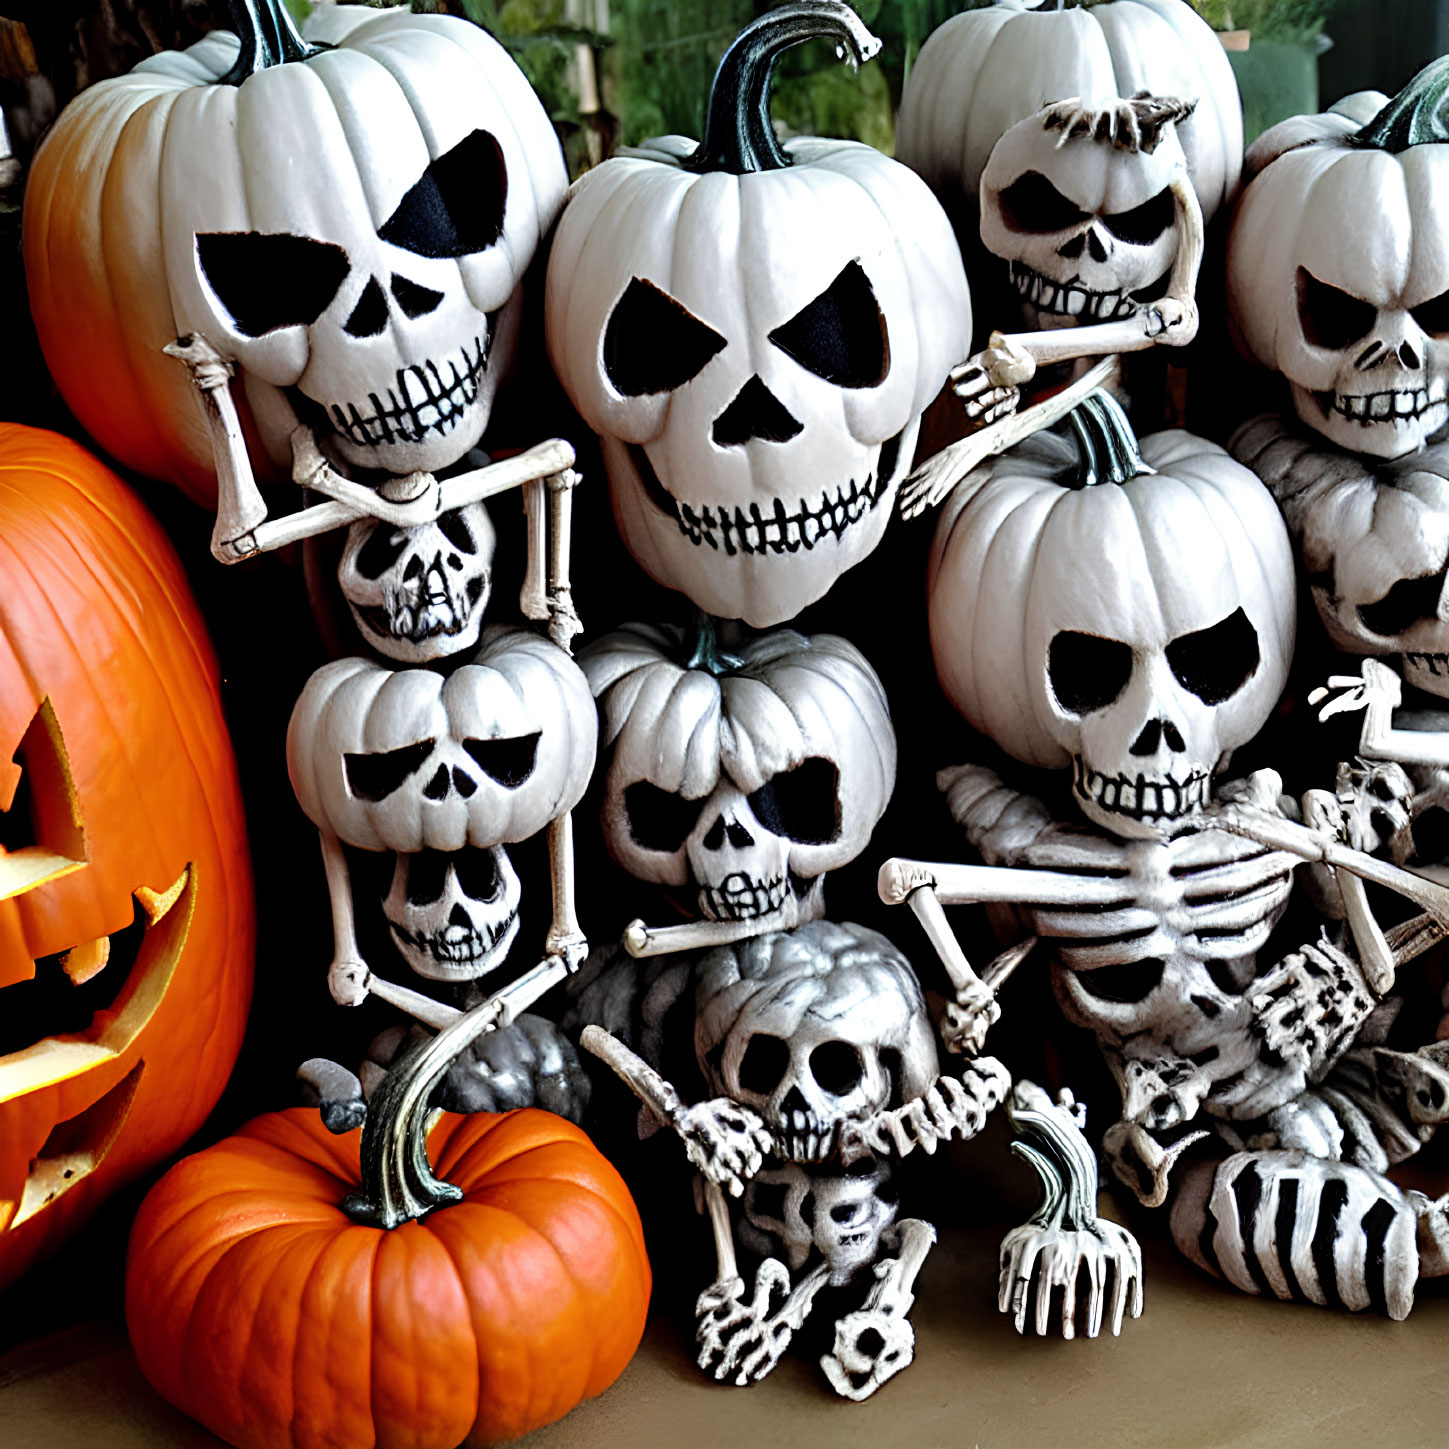 Skeleton Figurines with Jack-o'-lantern Heads and Carved Pumpkin Display